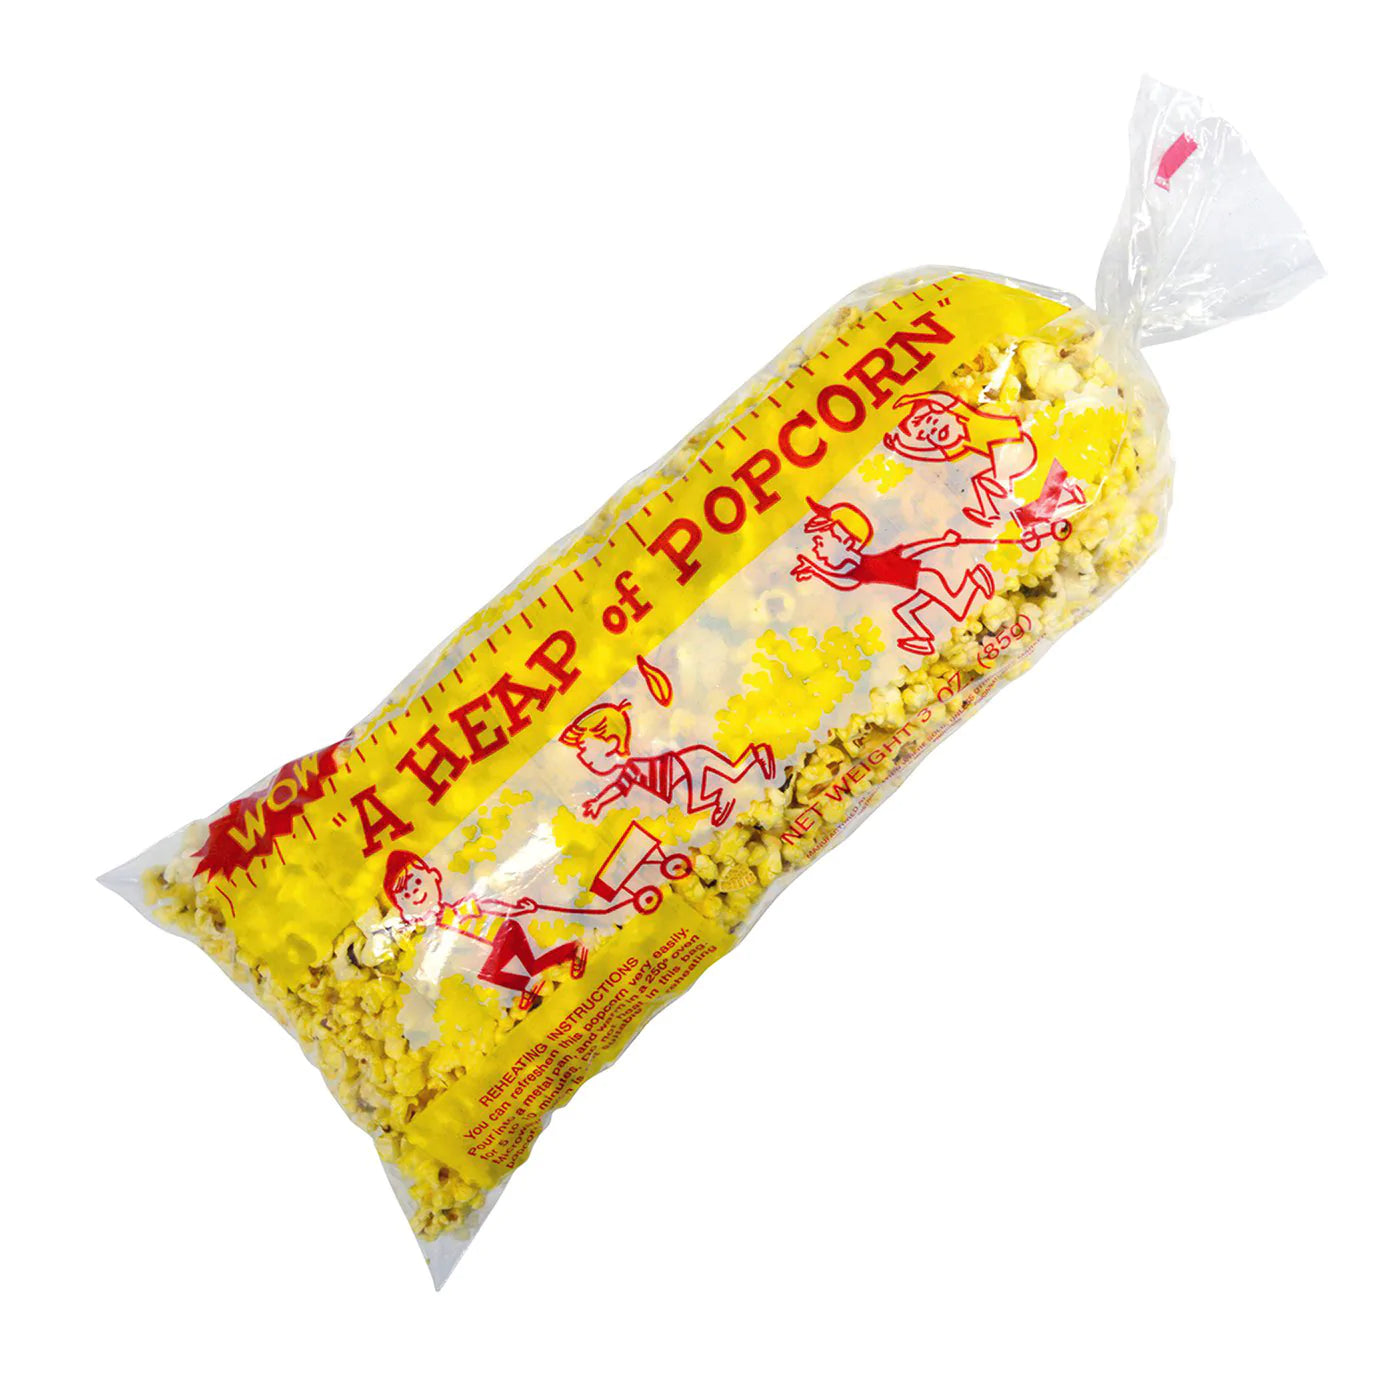 30" A Heap of Popcorn Bag  (6.5 oz) case